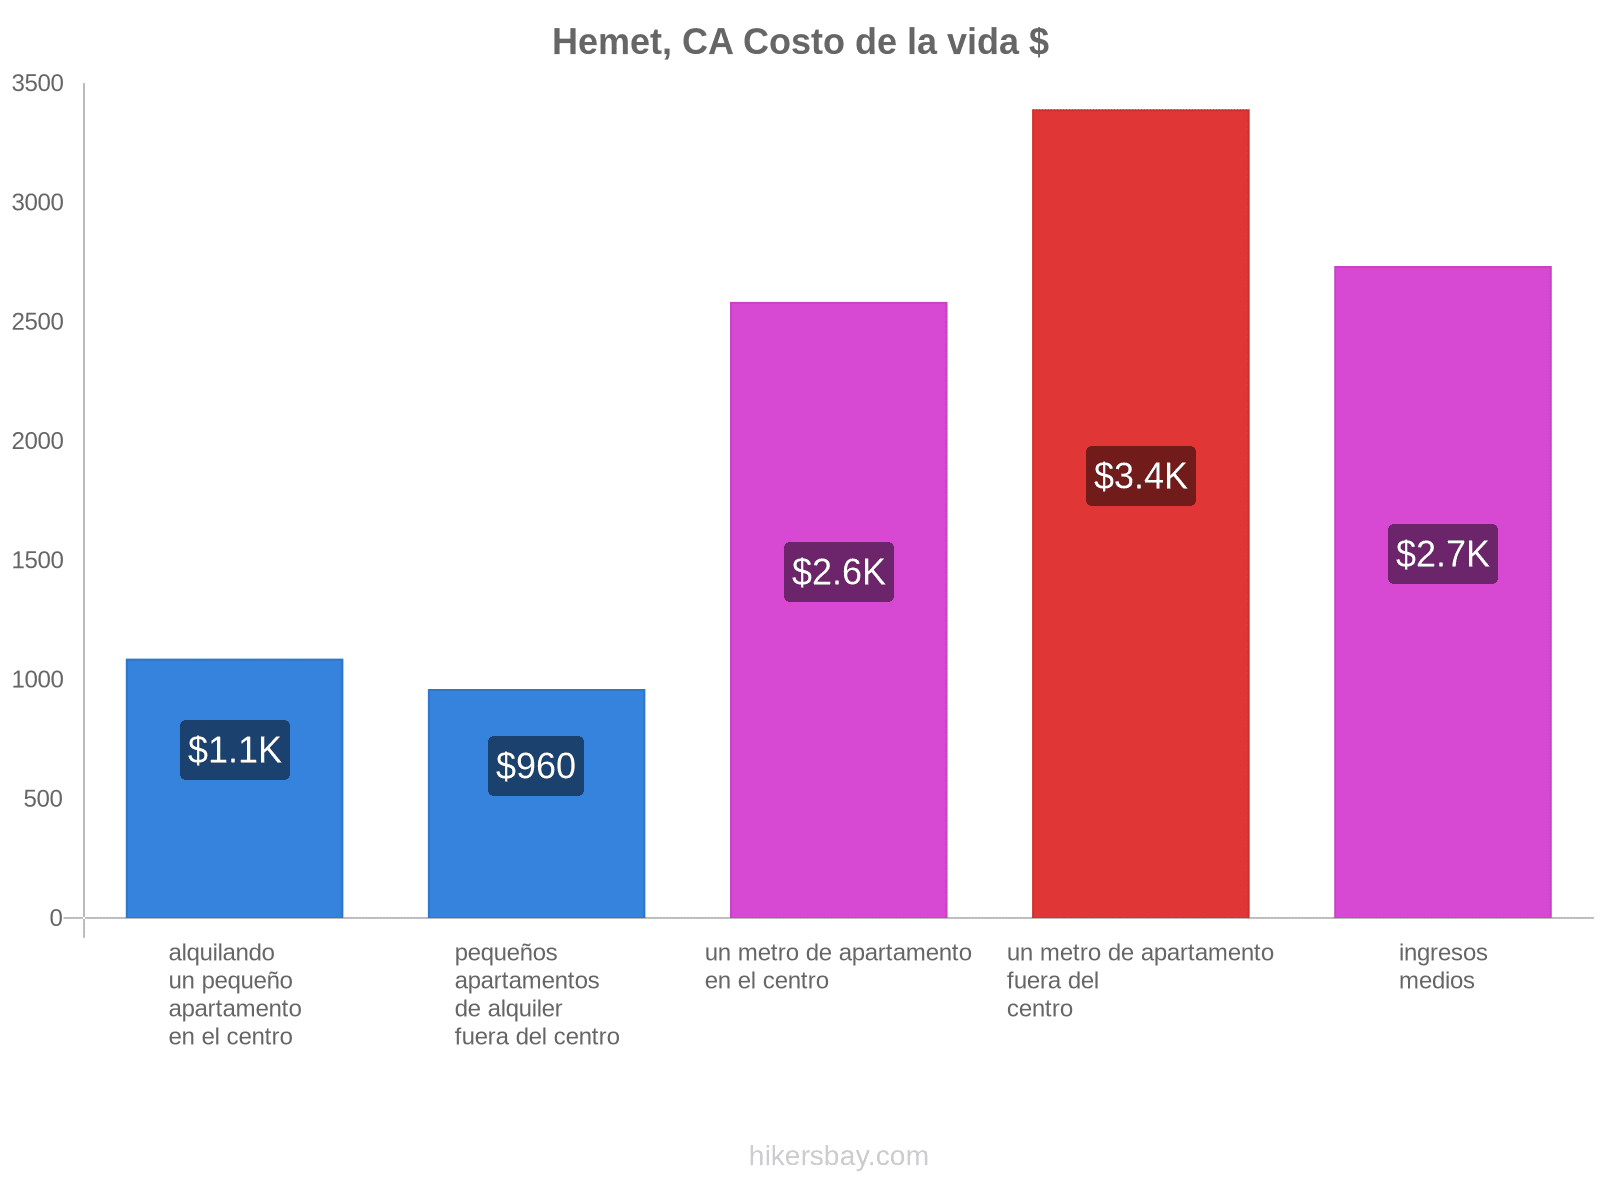 Hemet, CA costo de la vida hikersbay.com